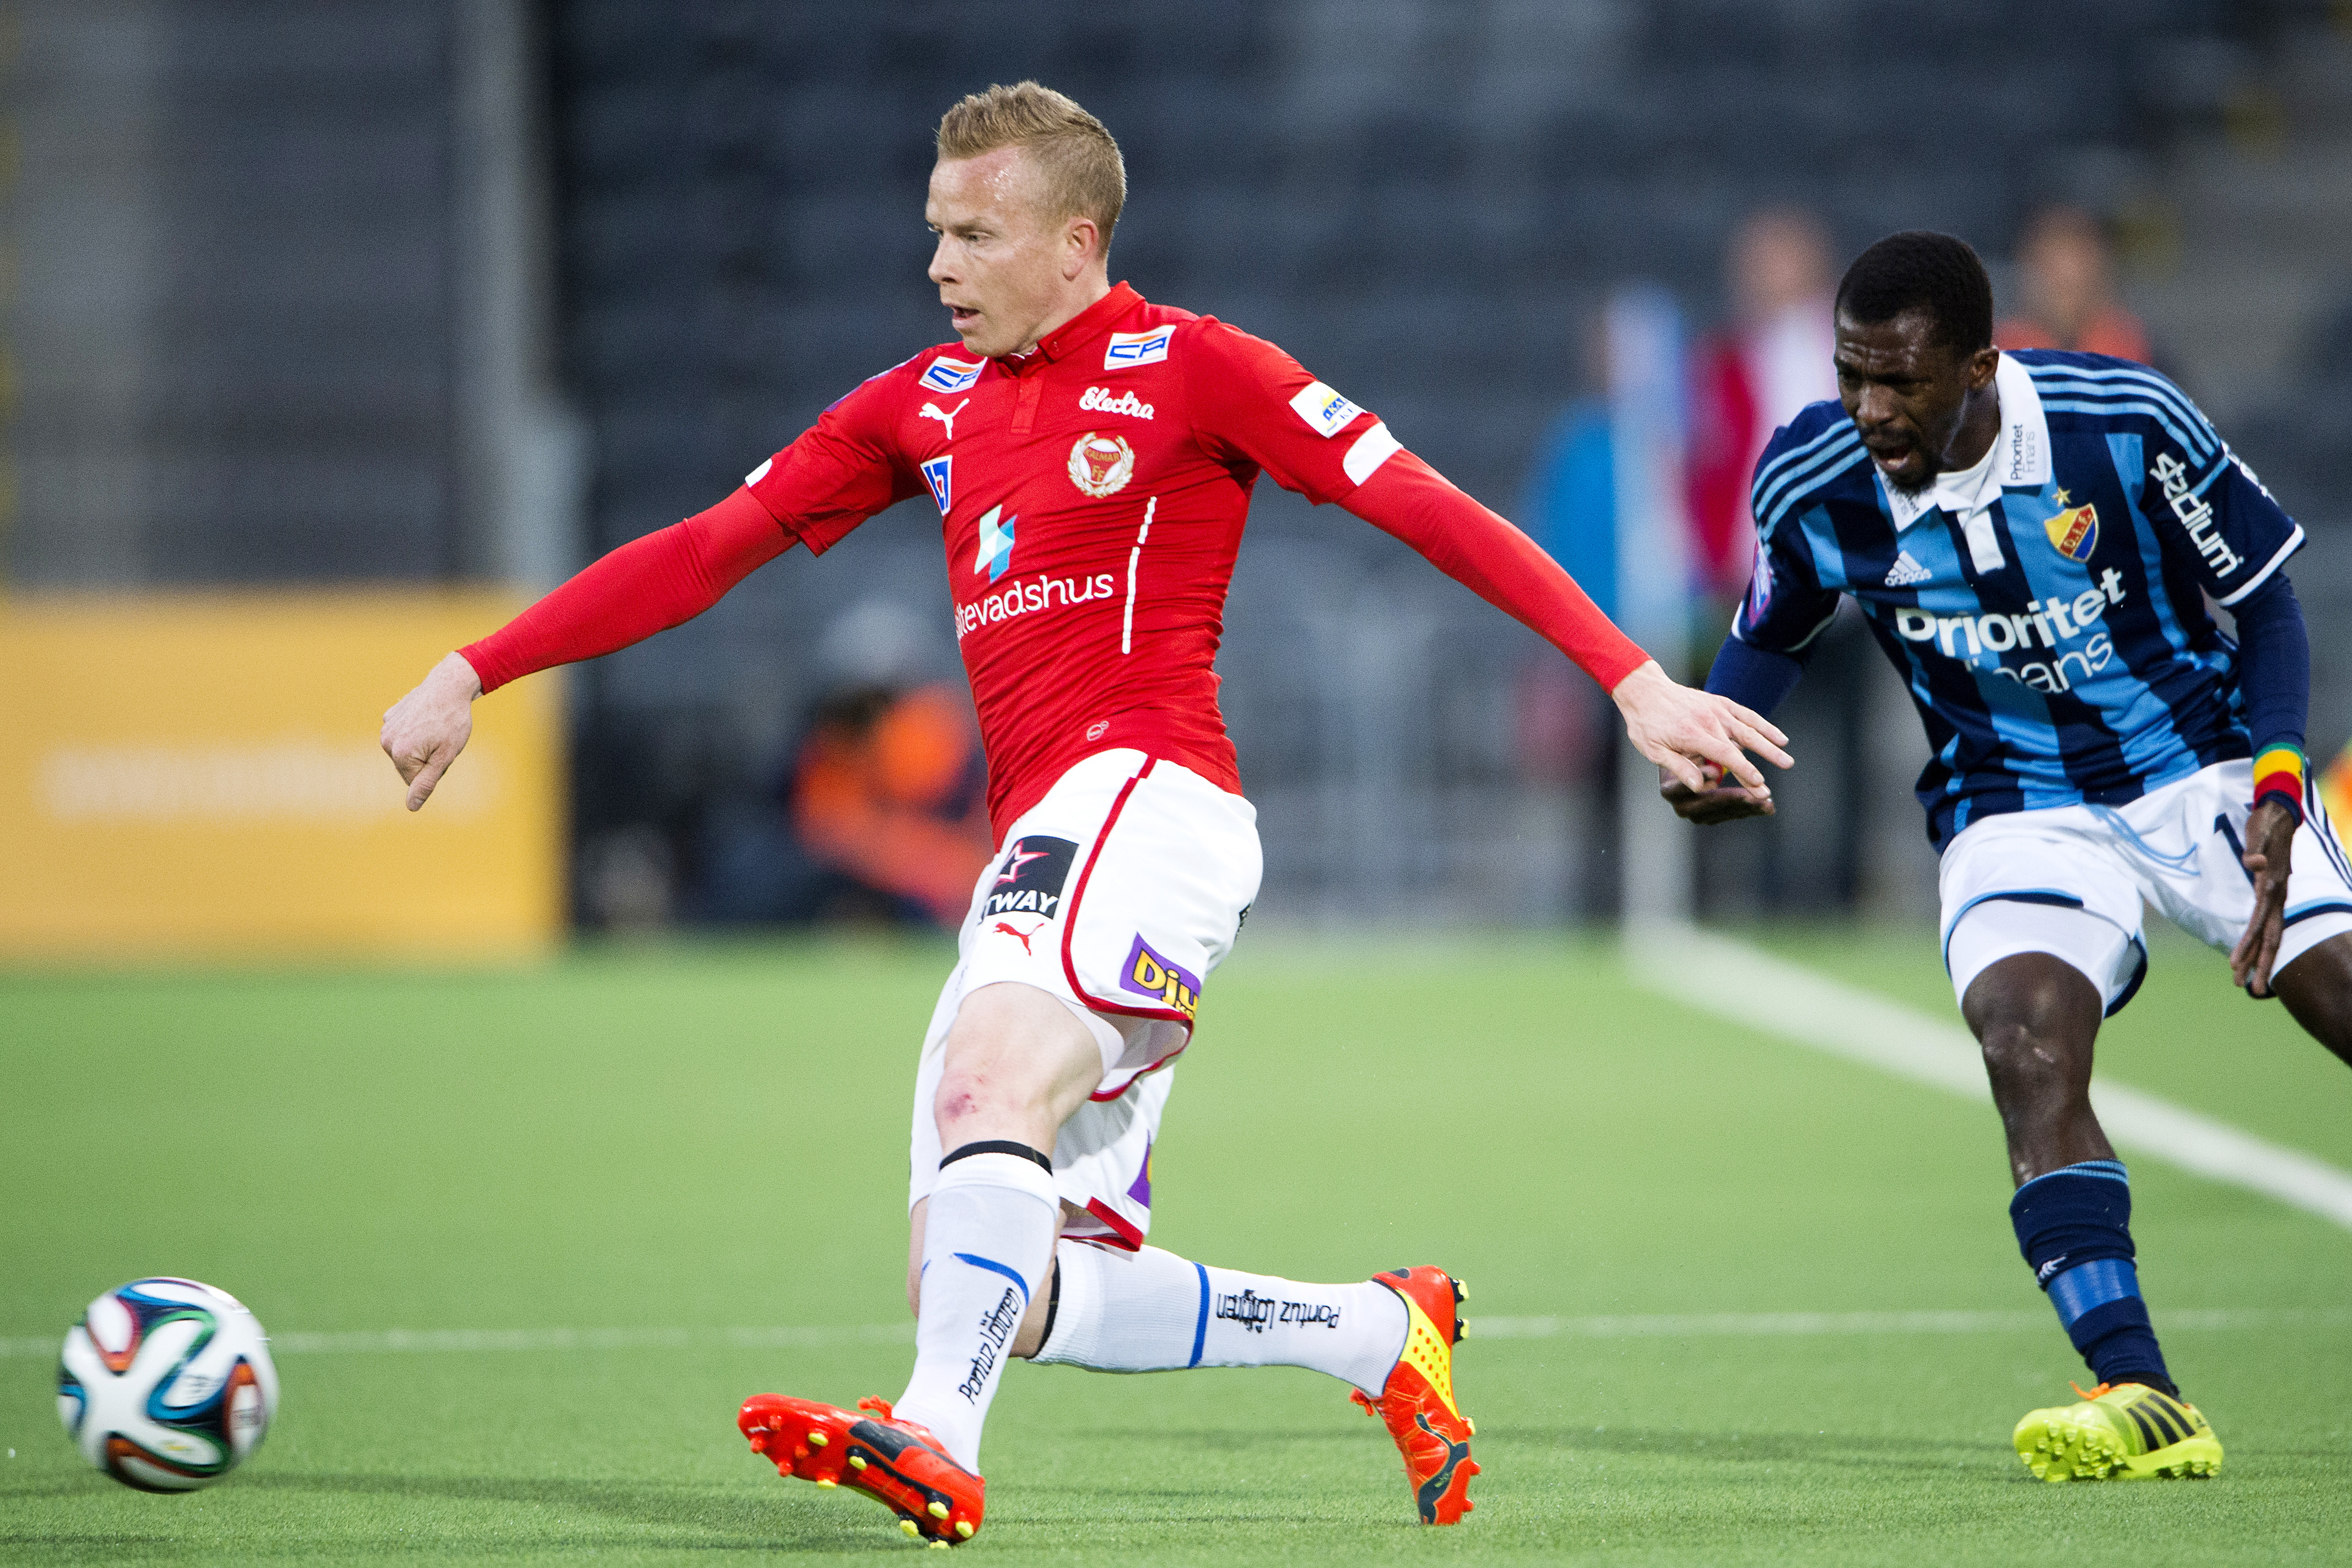 Han har spelat i Kalmar FF sedan 2009.